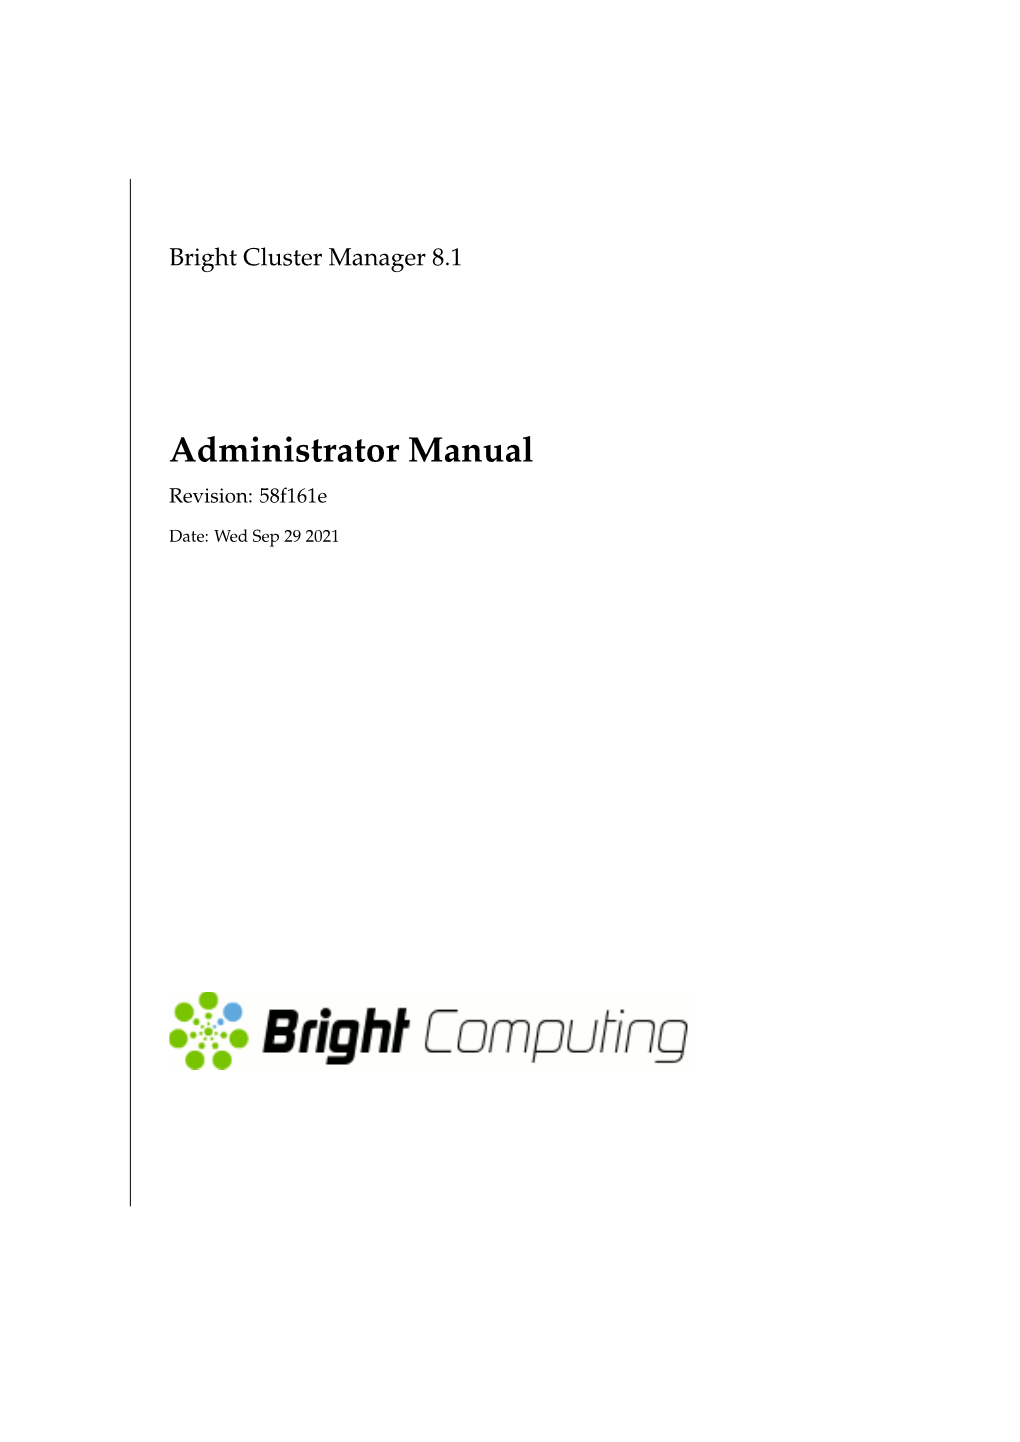 Administrator Manual Revision: 58F161e